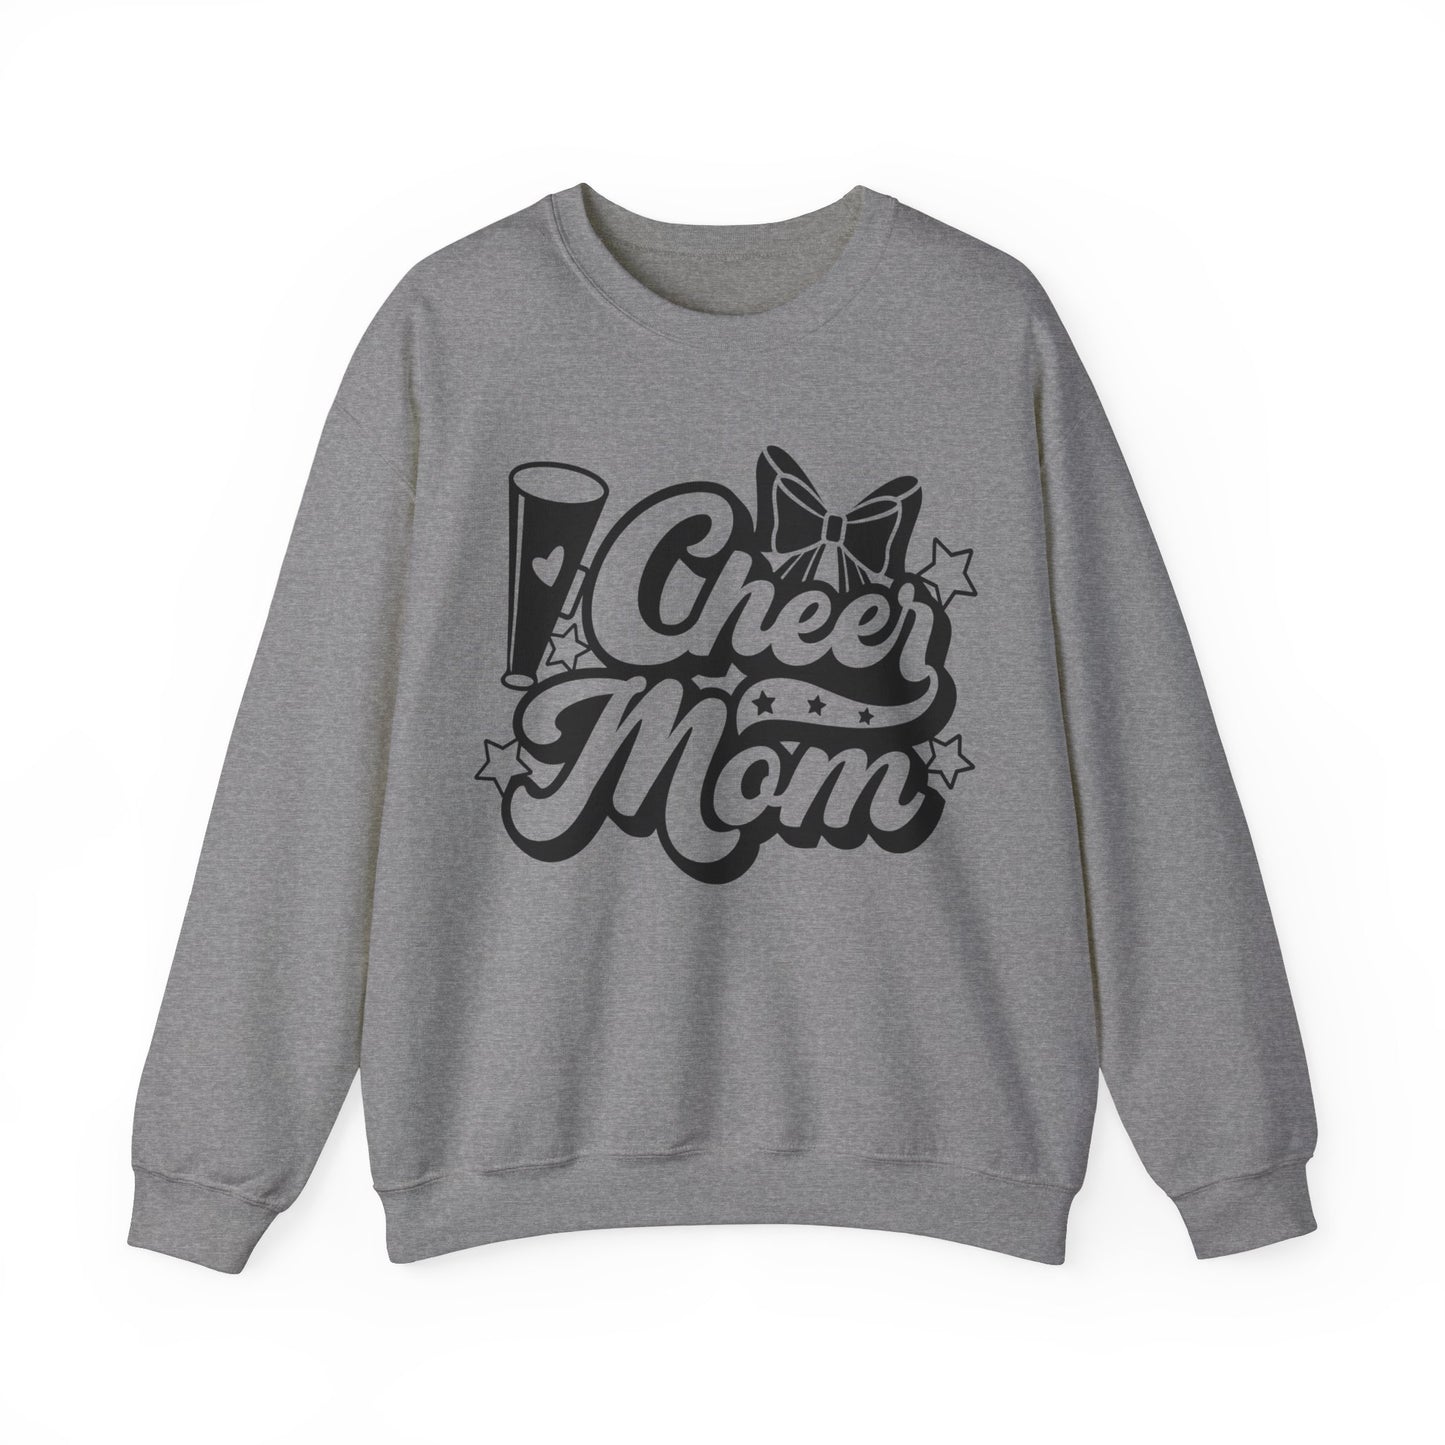 Vintage Cheer Mom - Crewneck Sweatshirt